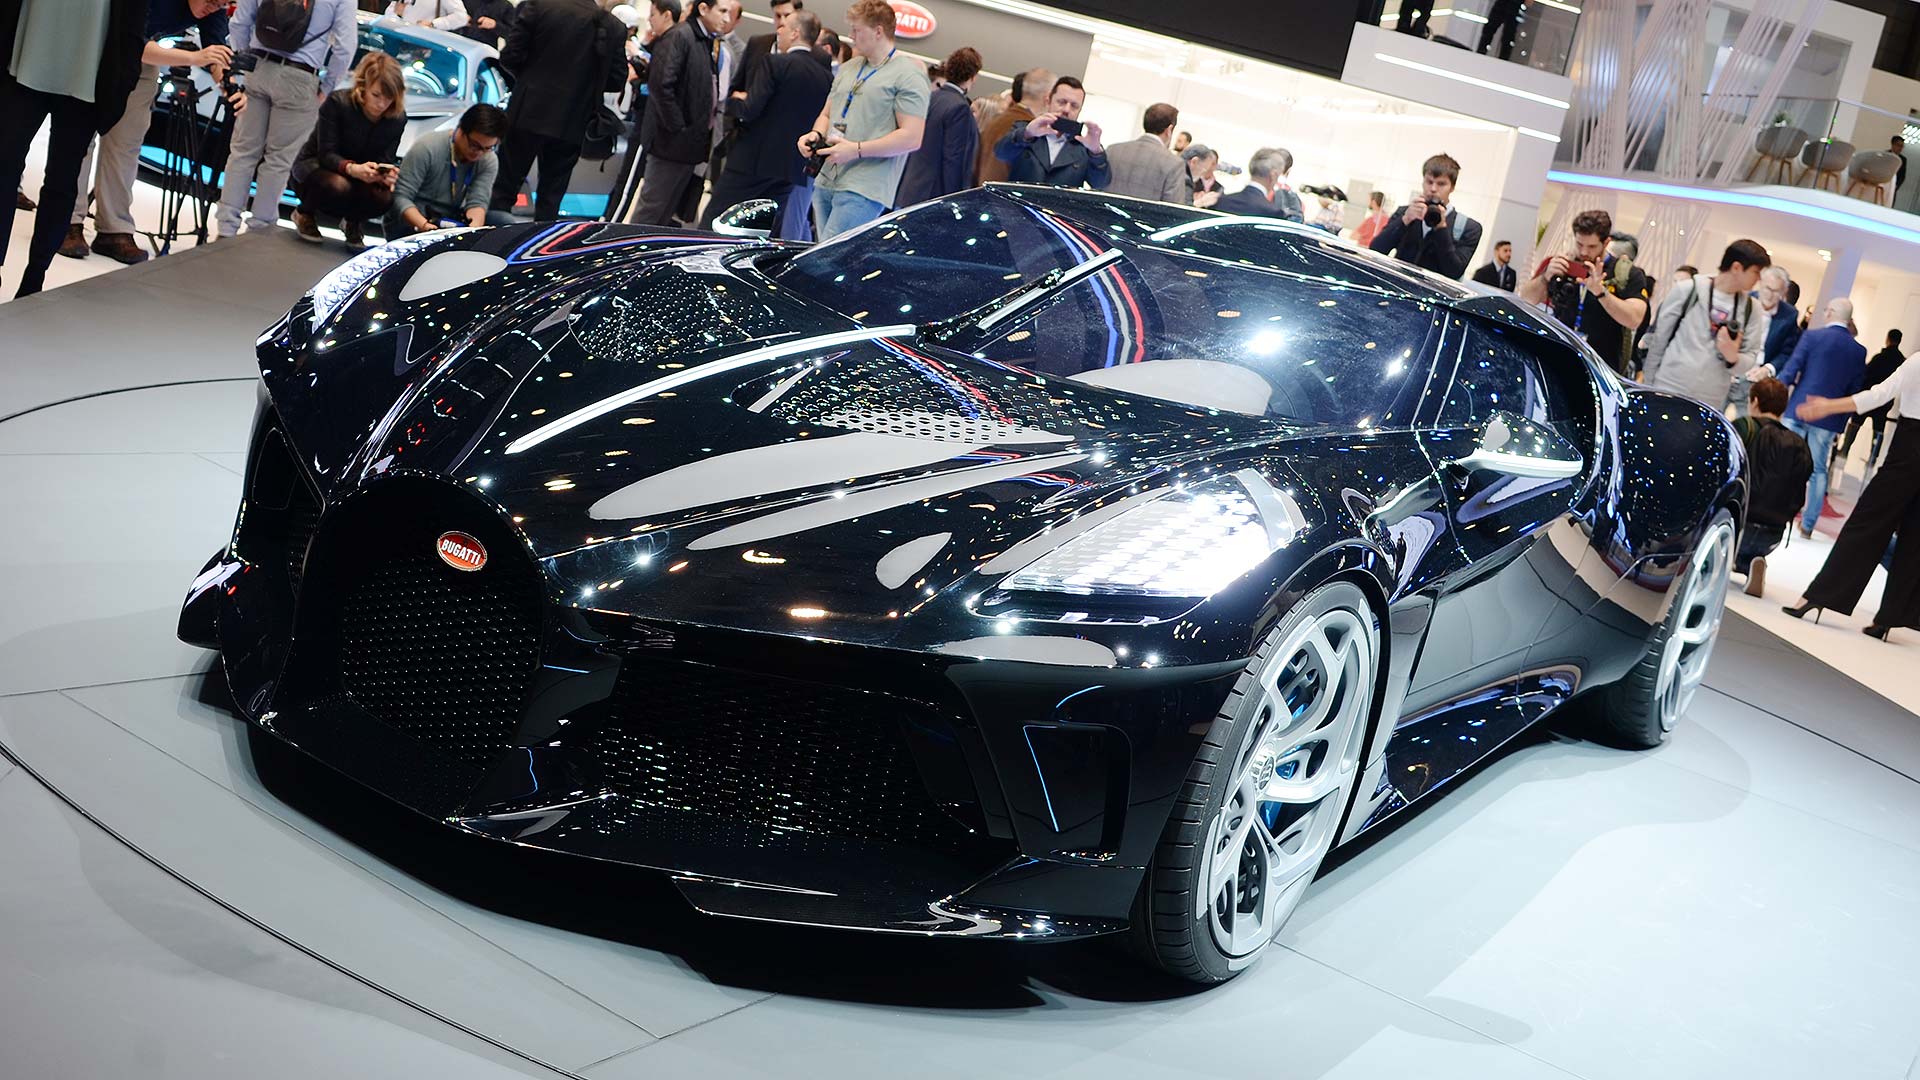 Машина за 1 доллар. Бугатти Вейрон 2022. Новая Бугатти 2022. Машина Bugatti la voiture noire. Самый дорогой автомобиль: Bugatti la voiture noire.